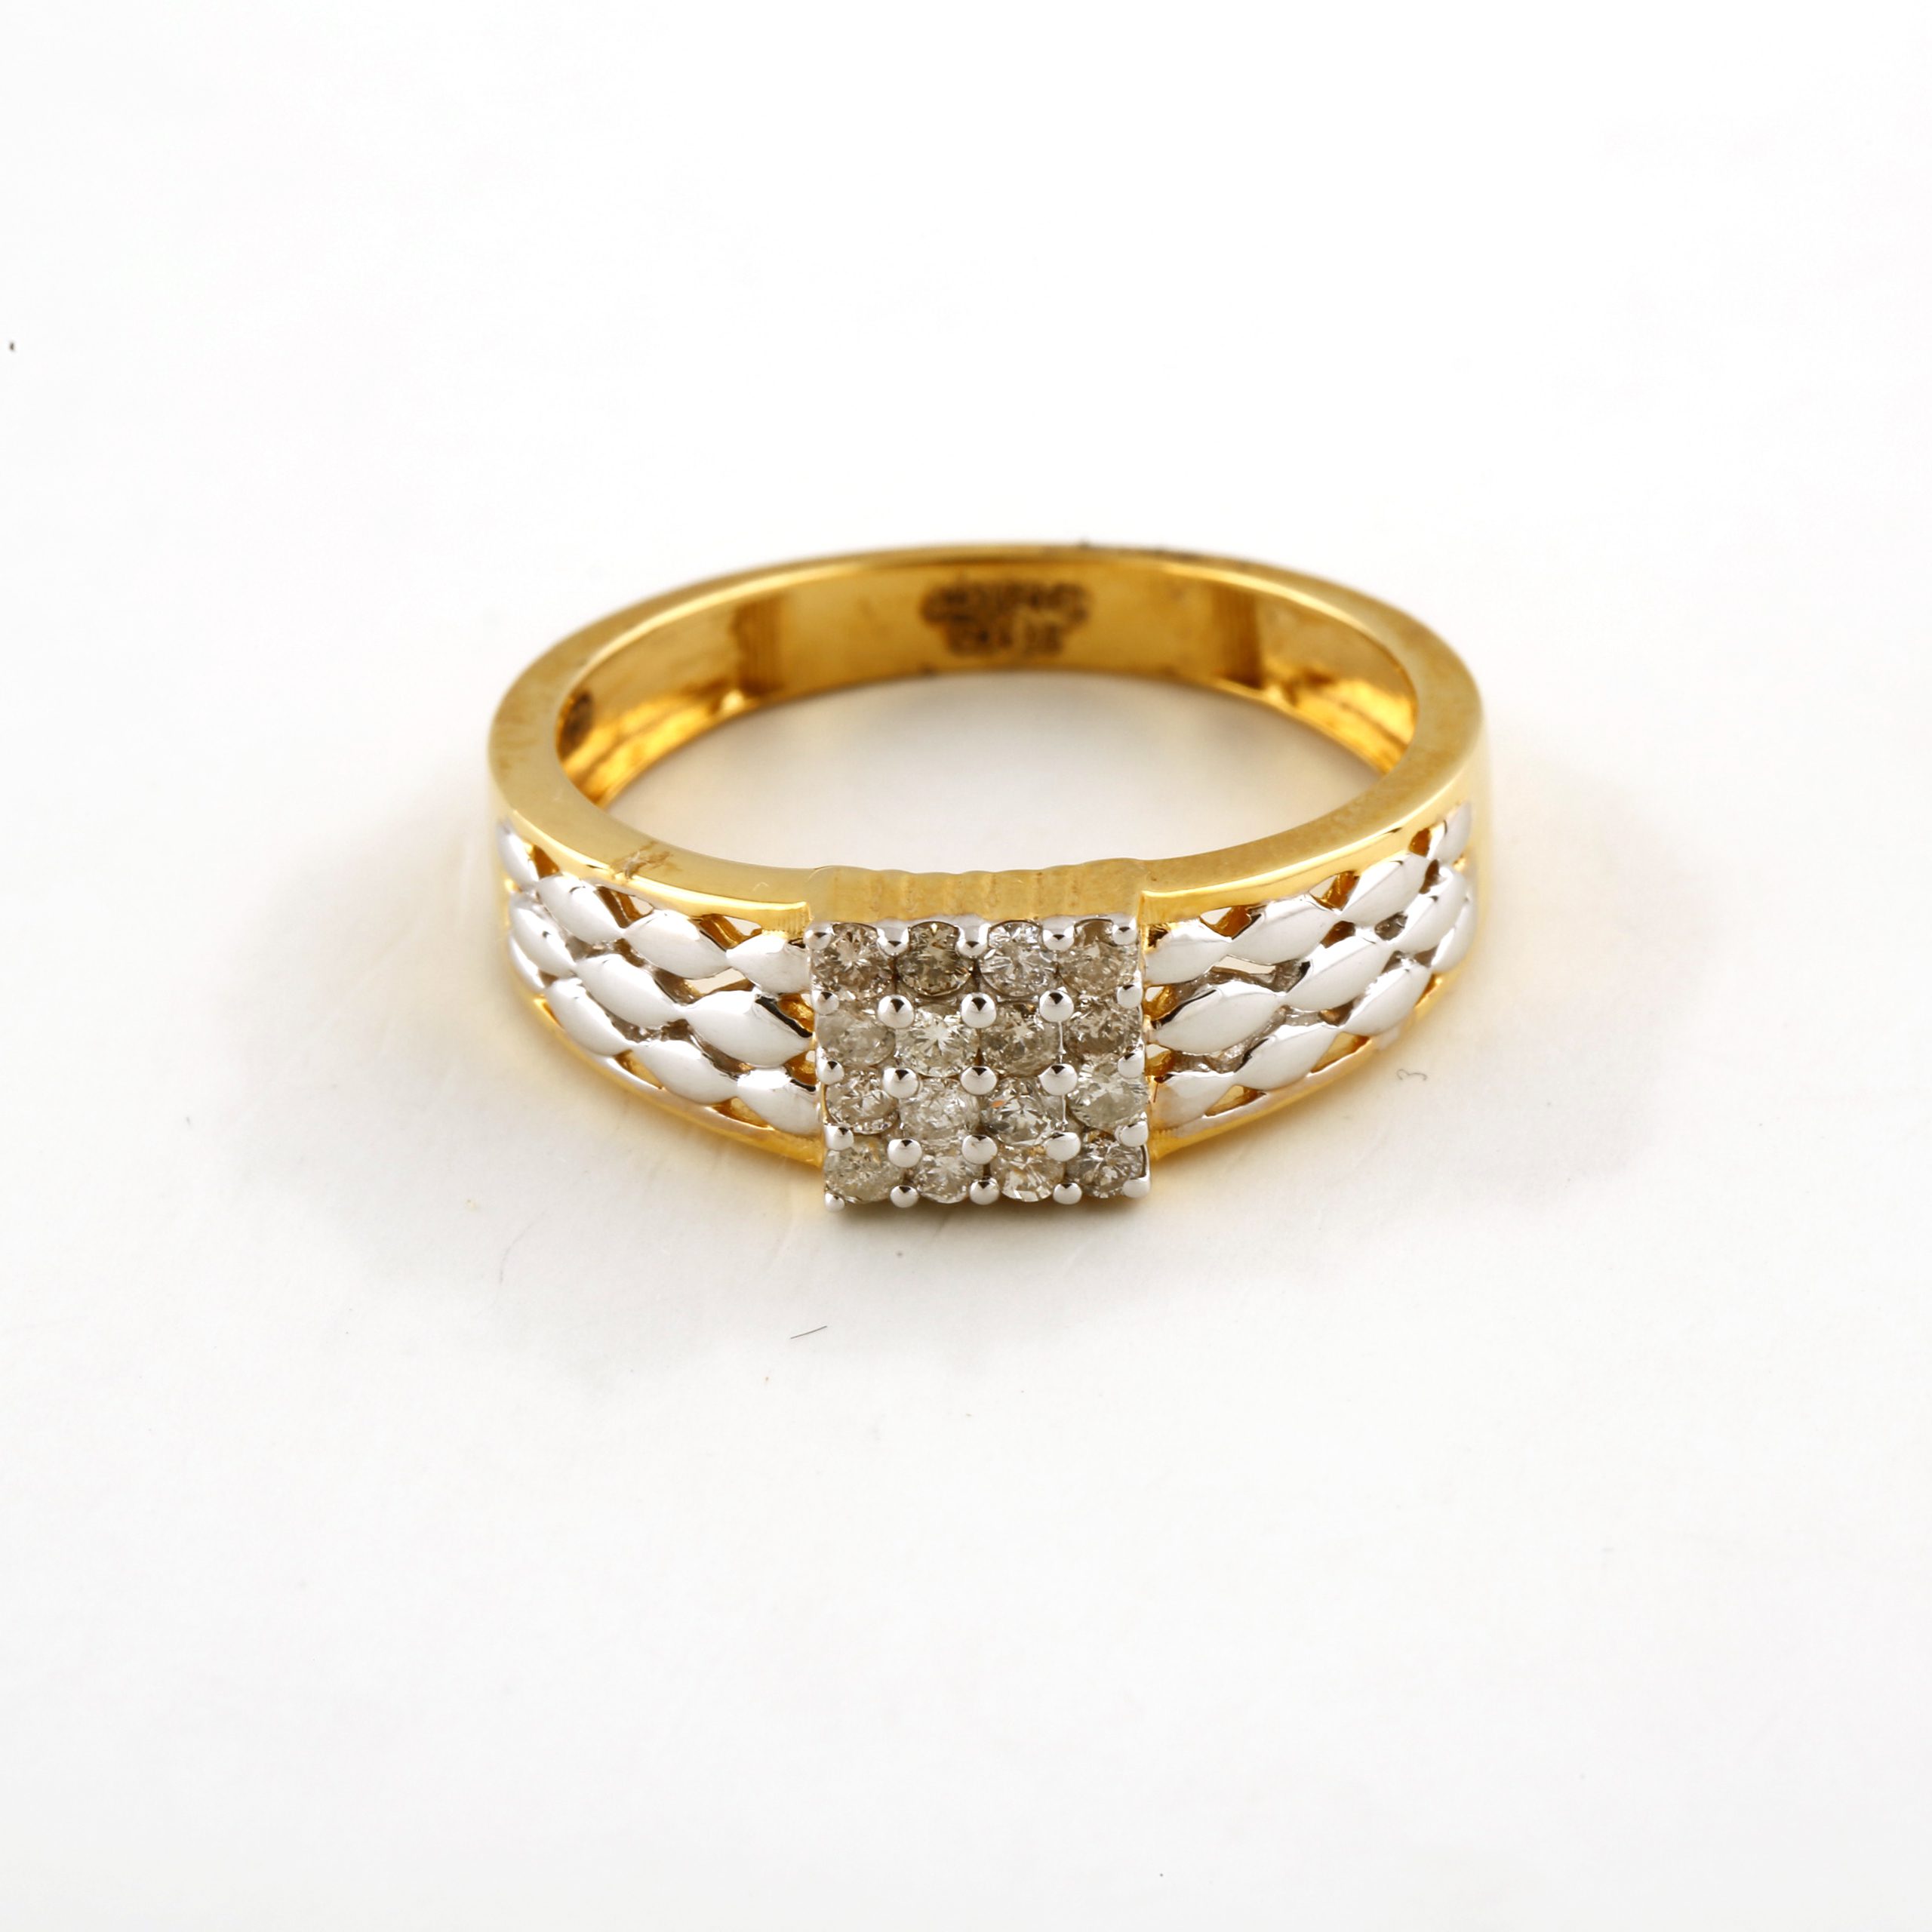 Buy Mens Diamond Ring, Mens Pinky Ring, Man Diamond Ring, Men Statement Ring  18K White Gold Unisex Ring Online in India - Etsy